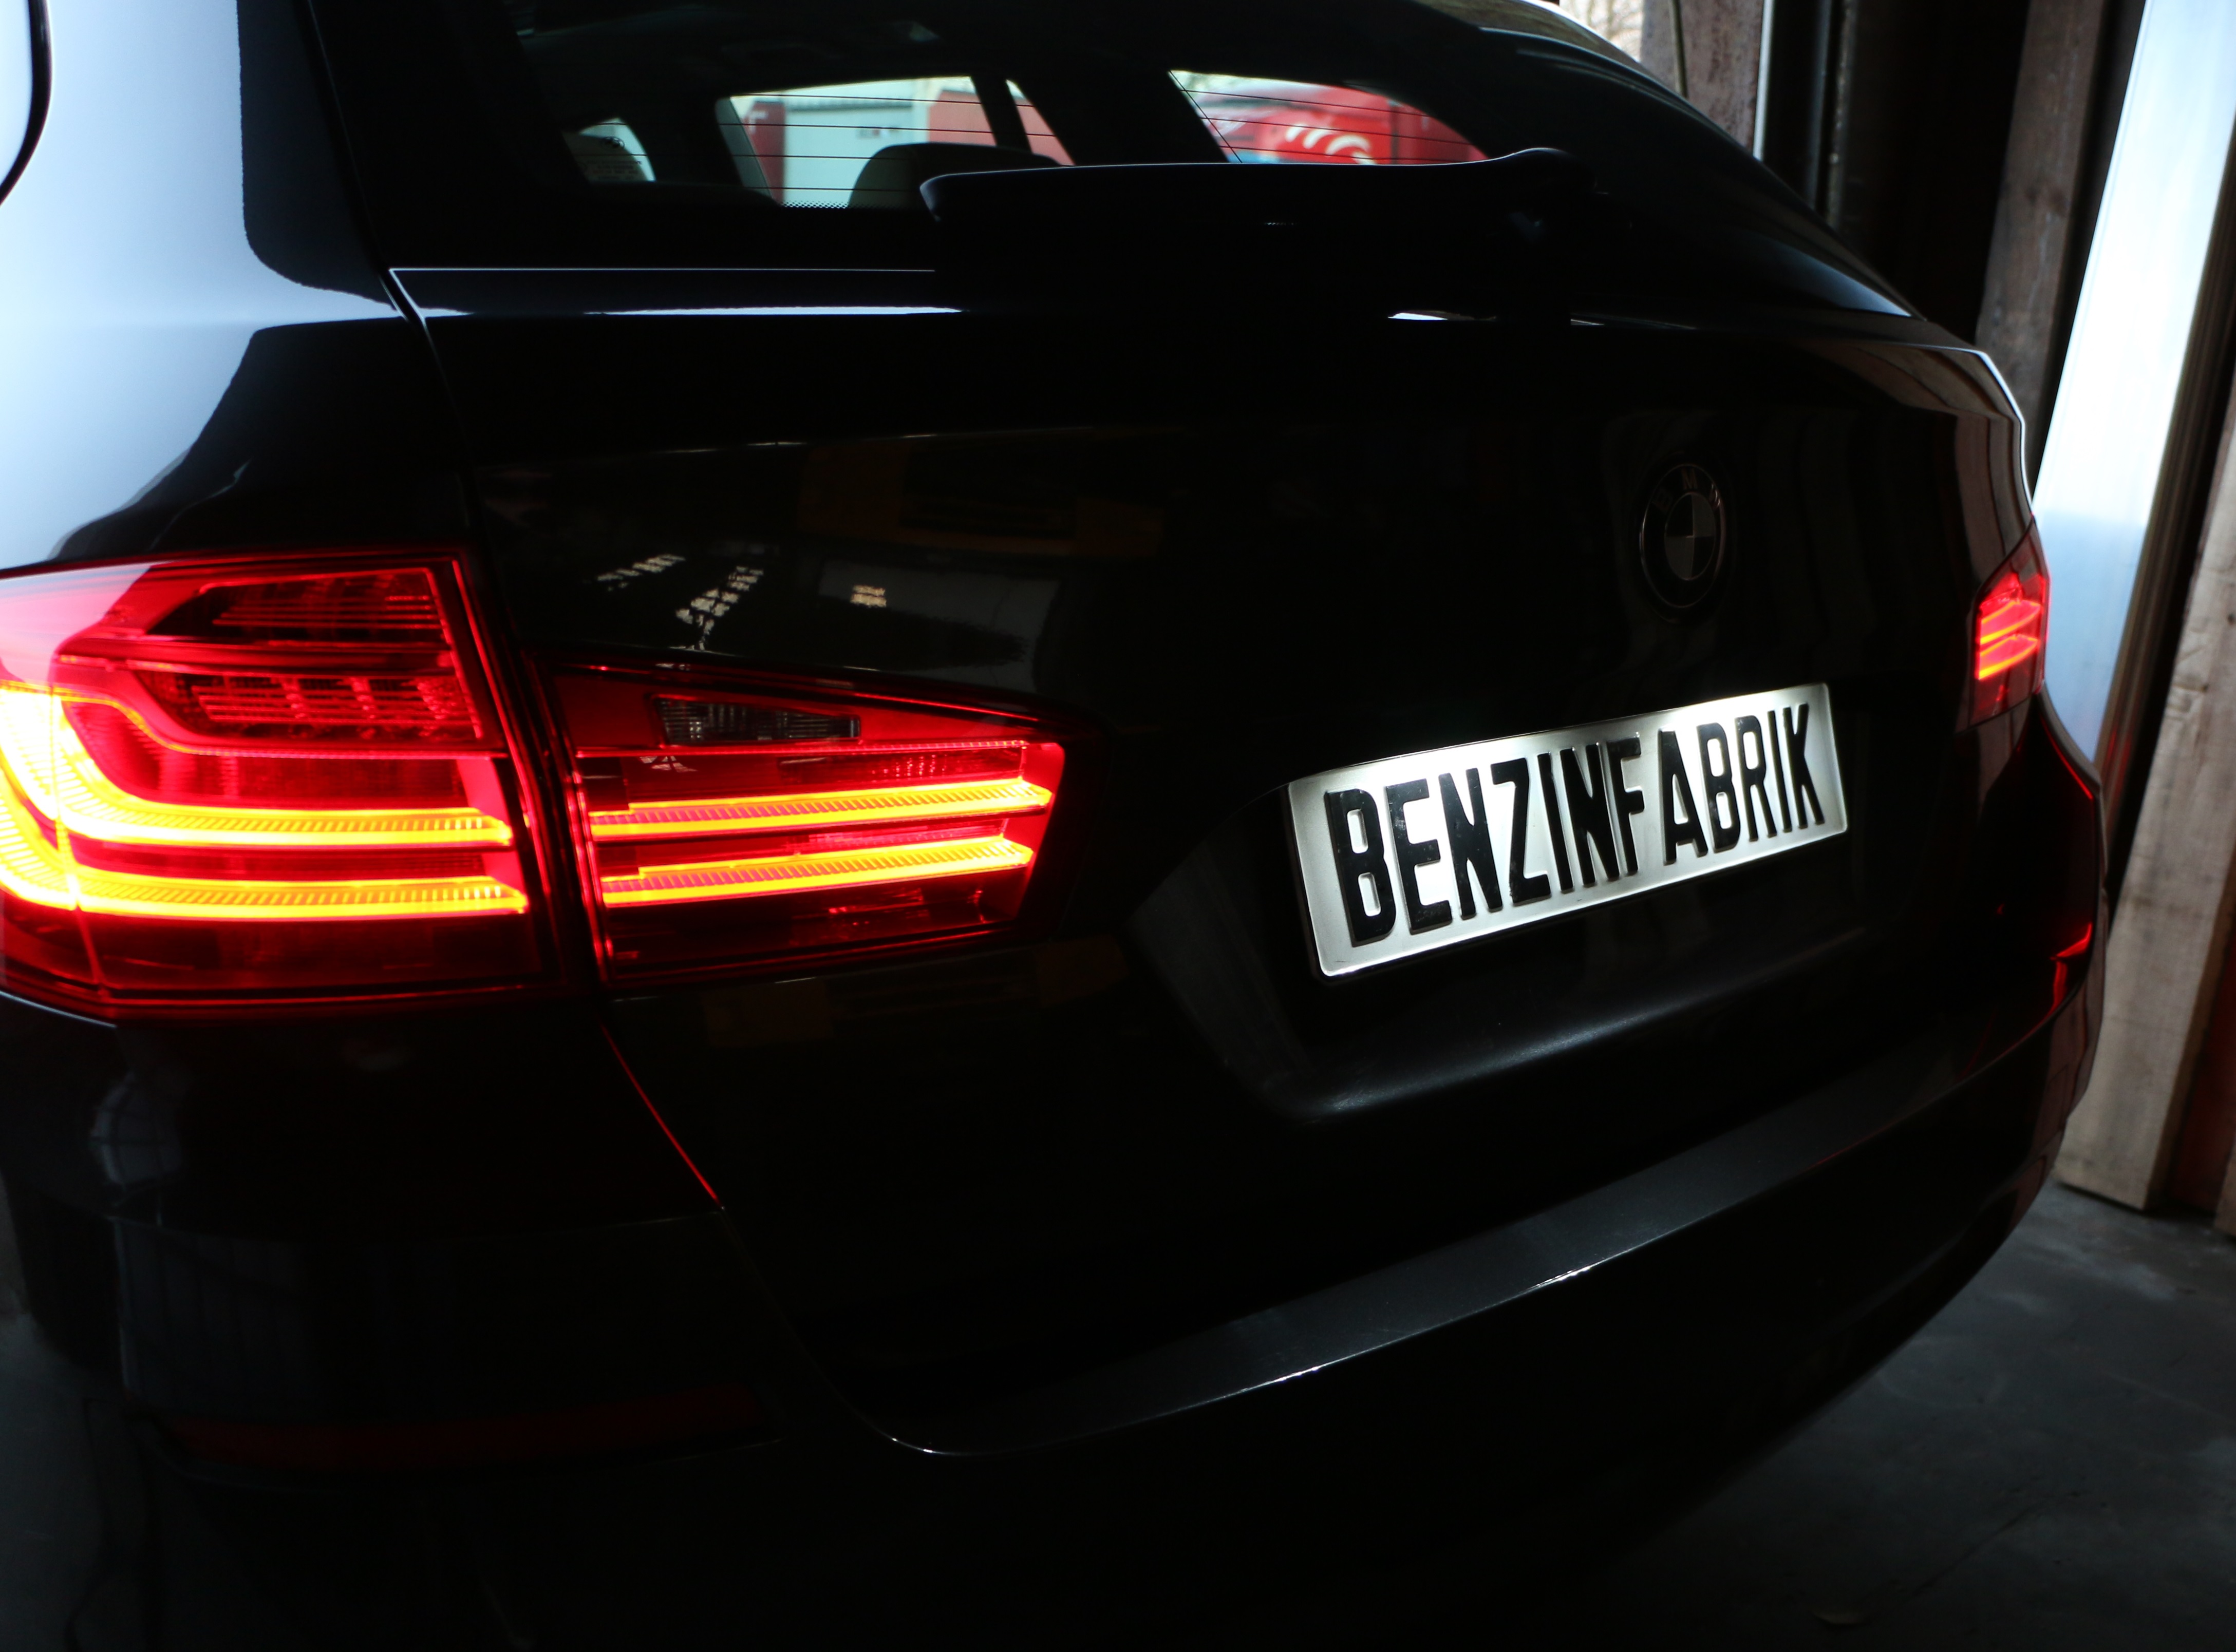 LED Kennzeichenbeleuchtung Module Audi A4 B6 Bj. 00-04, mit E-Prüfzeichen, LED  Kennzeichenbeleuchtung für Audi, LED Kennzeichenbeleuchtung